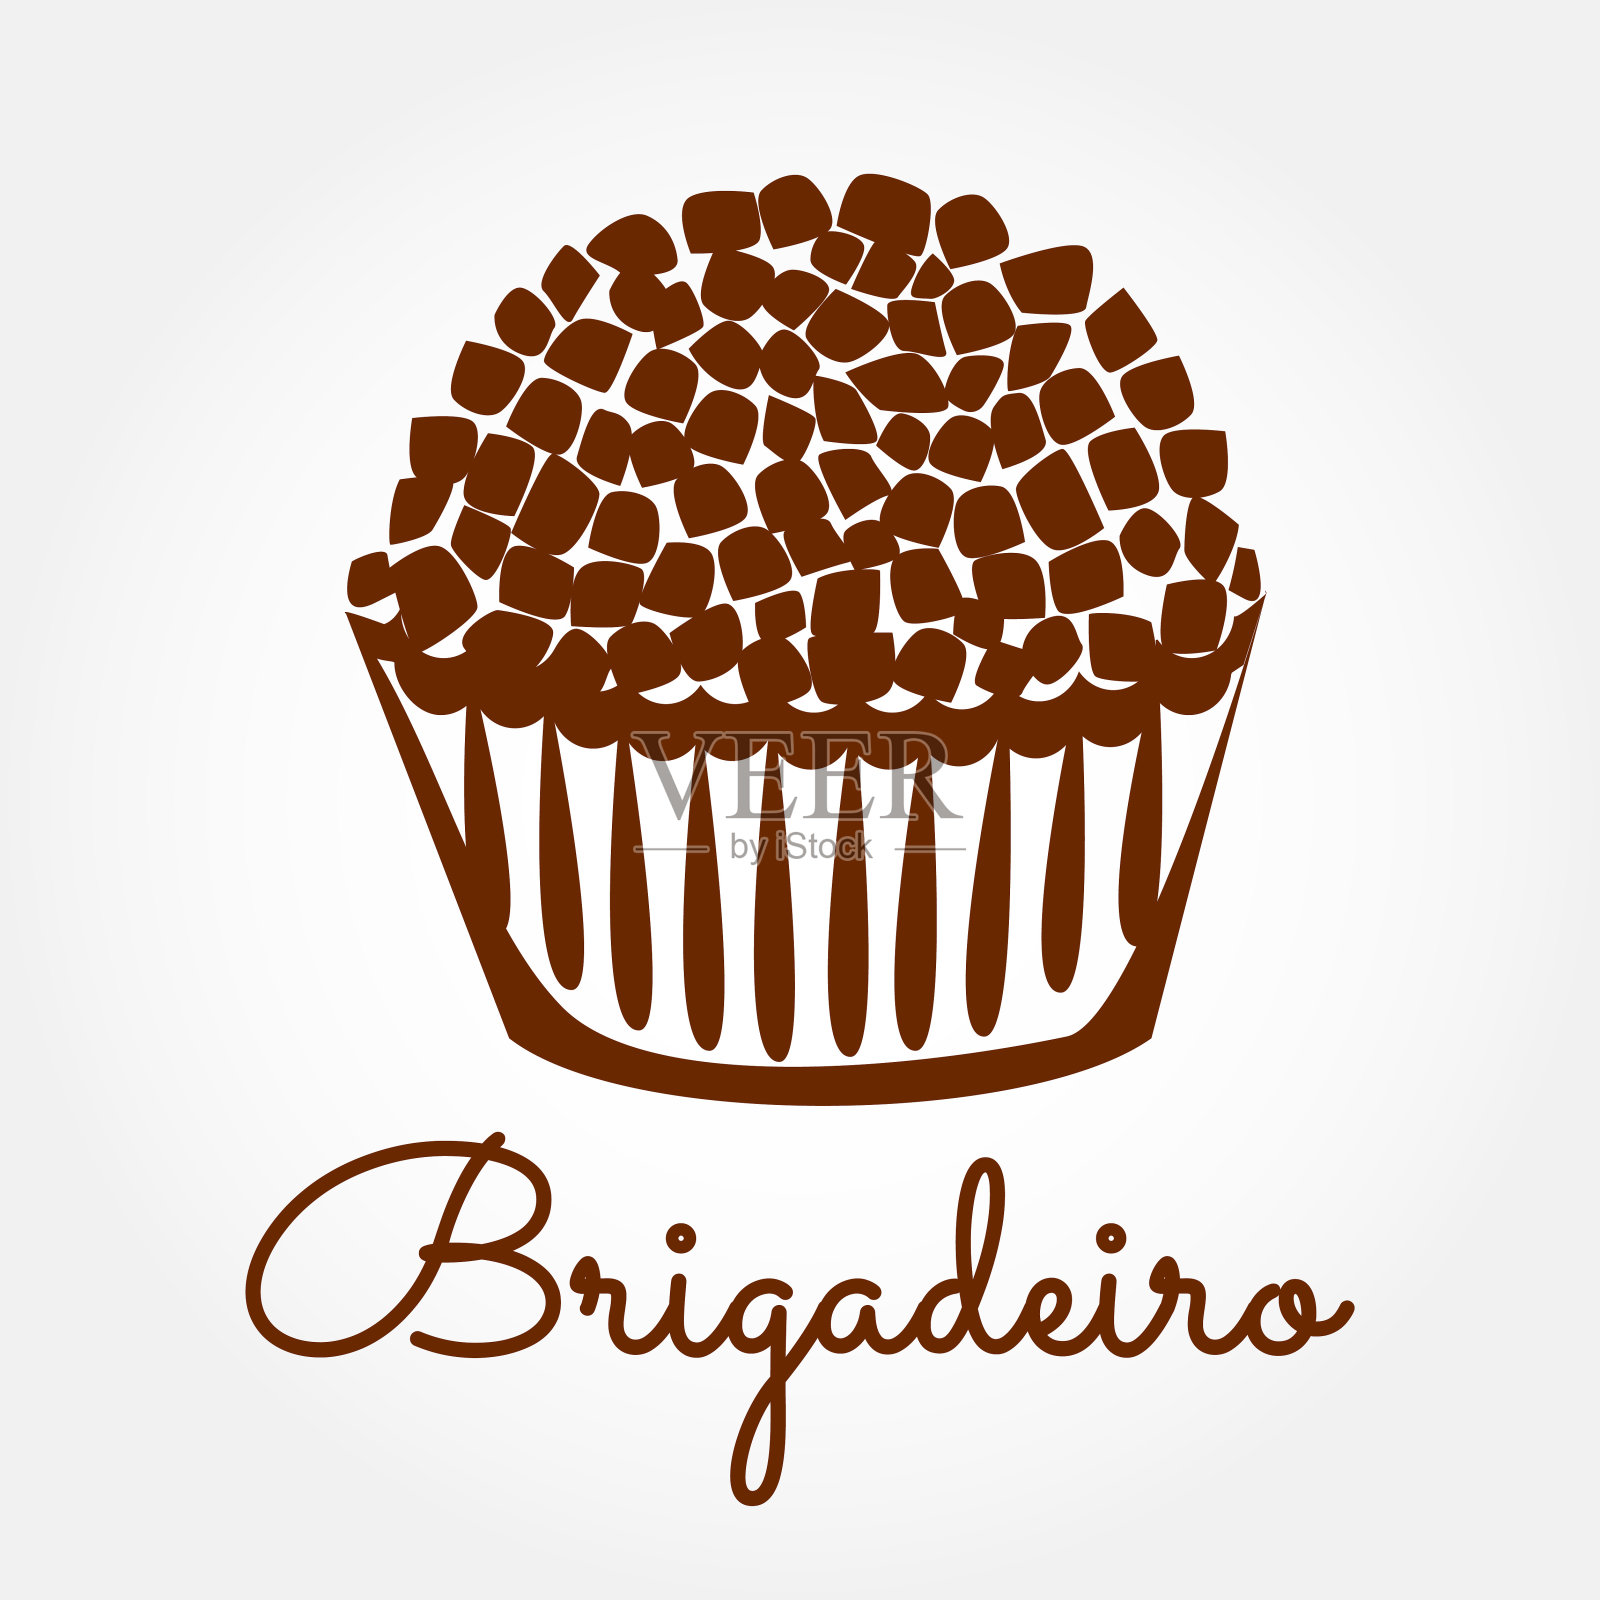 Brigadeiro图标矢量。巴西糖果准将设计插图。插画图片素材